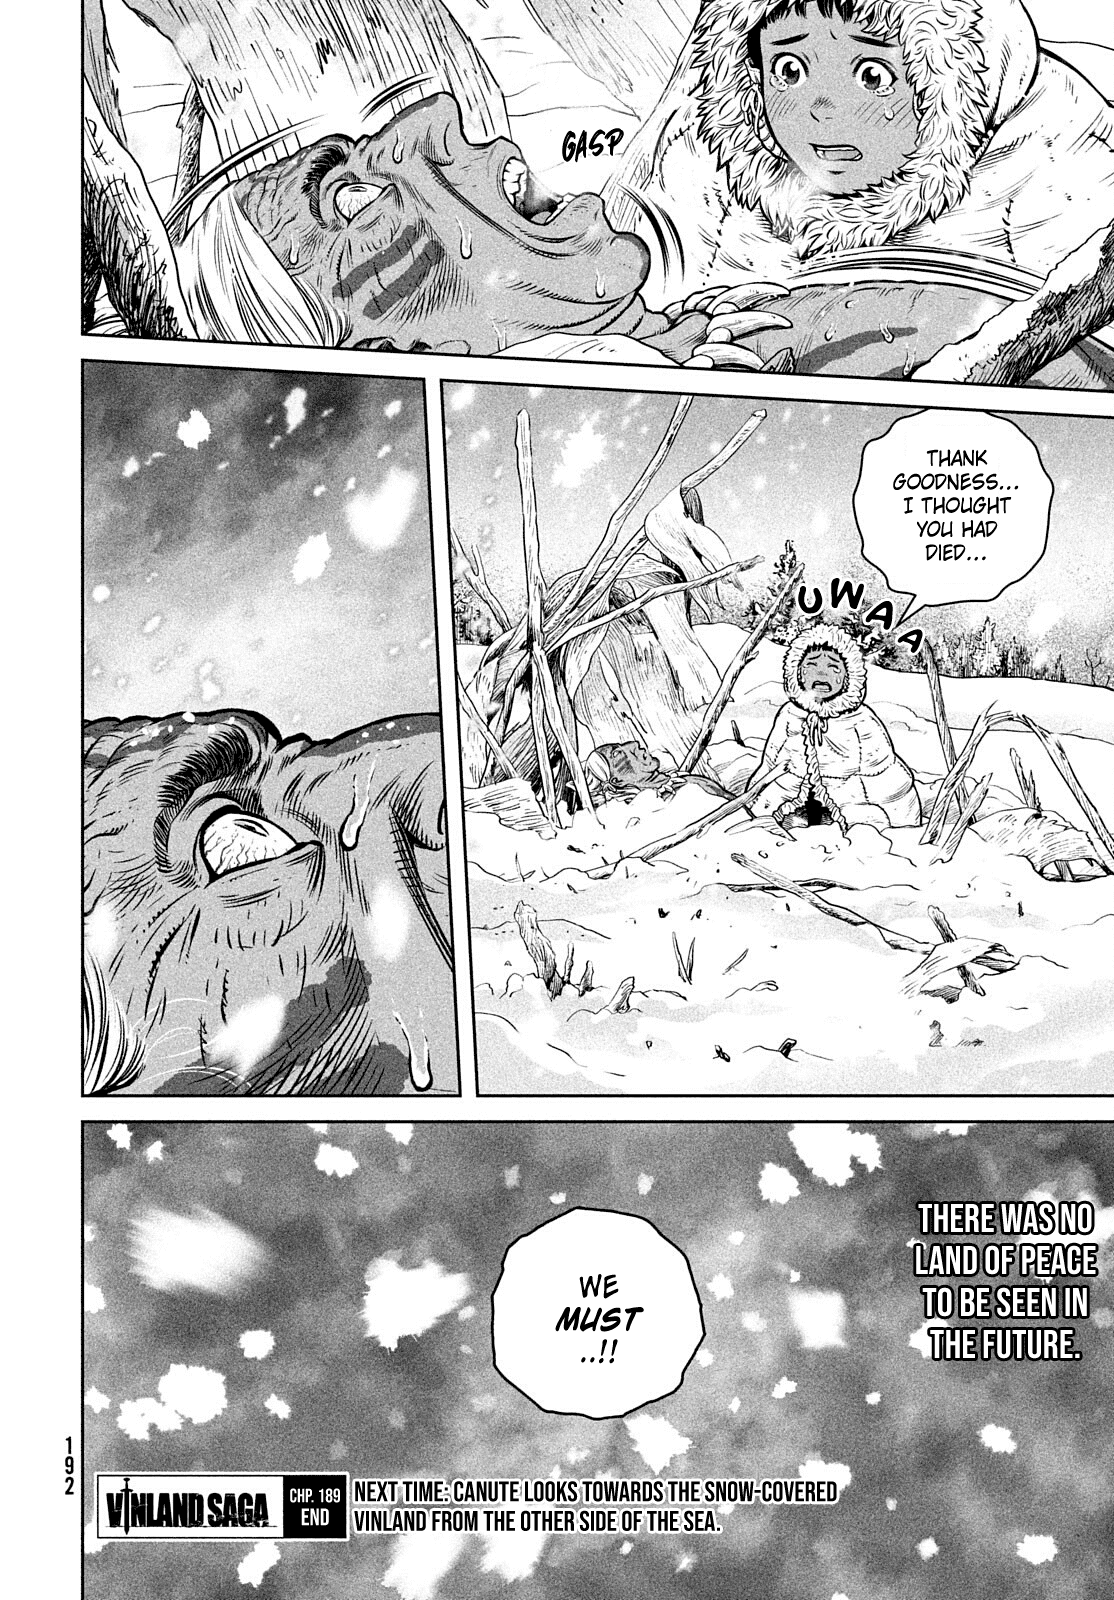 Vinland Saga Manga Manga Chapter - 189 - image 26